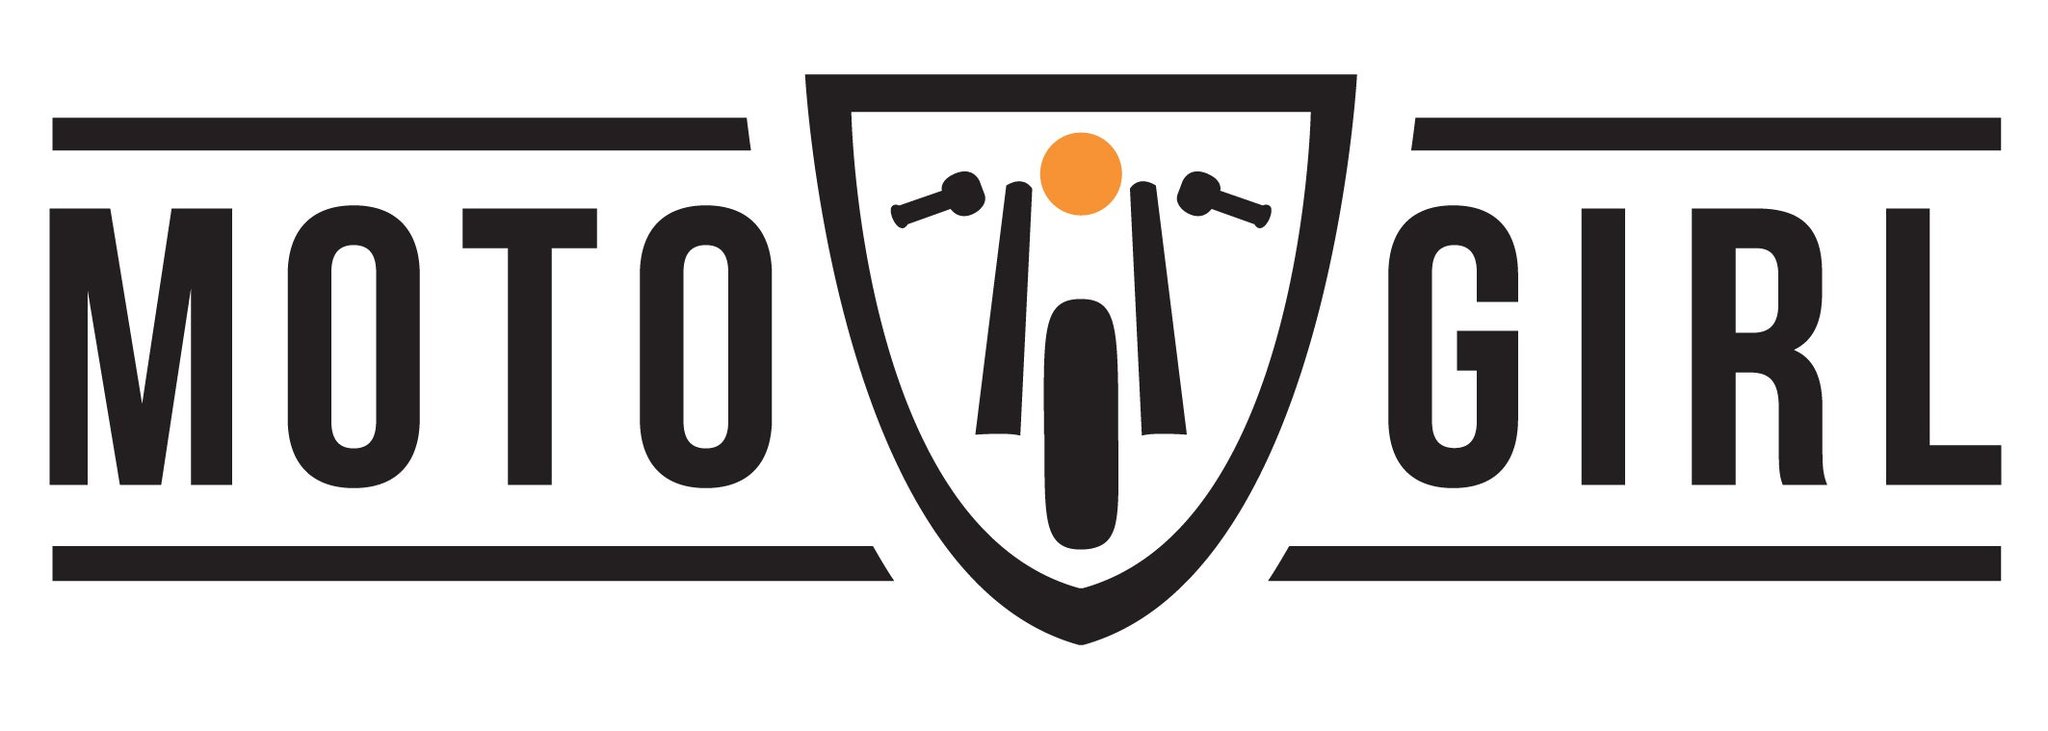 motogirl logo.indd